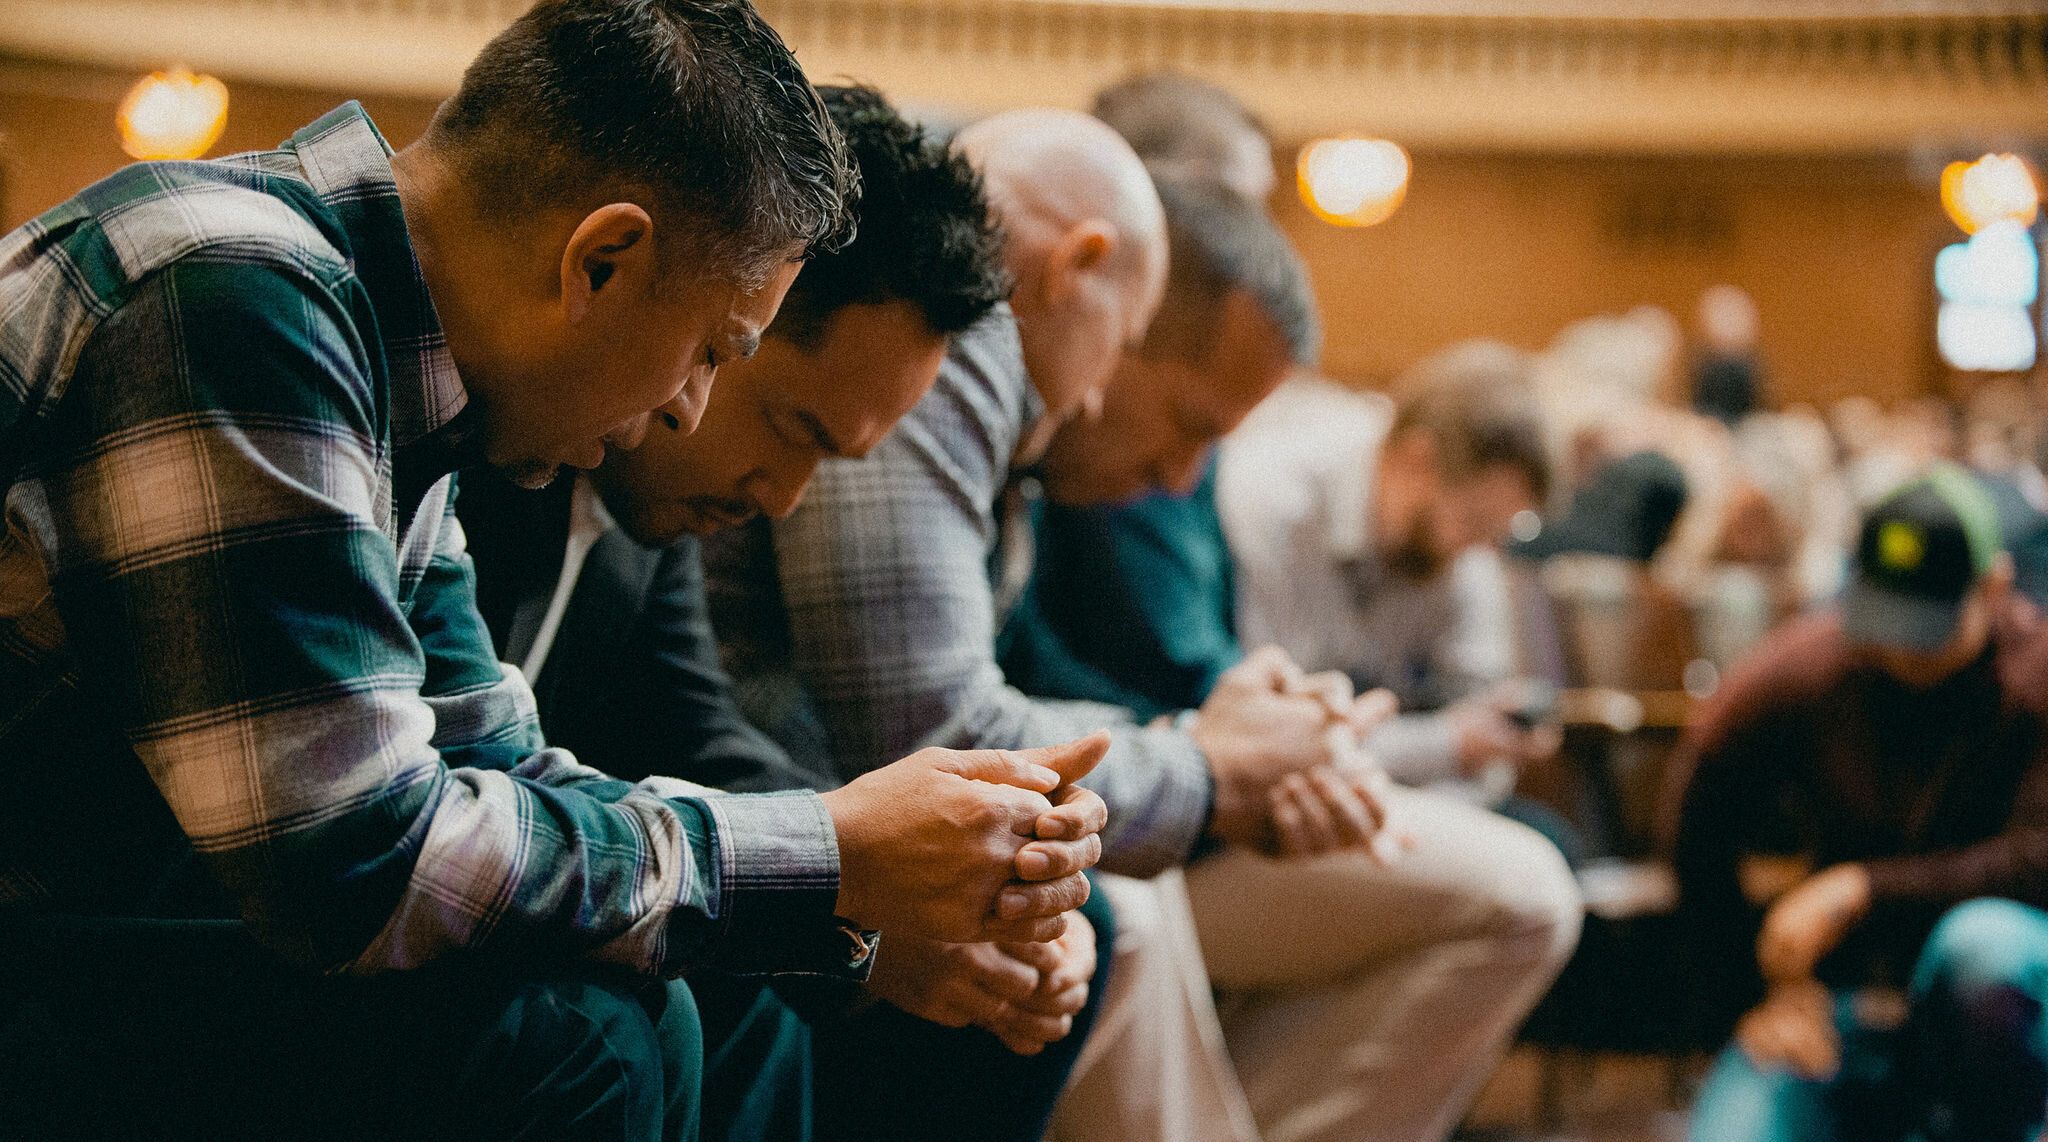 men are bowed in prayer together